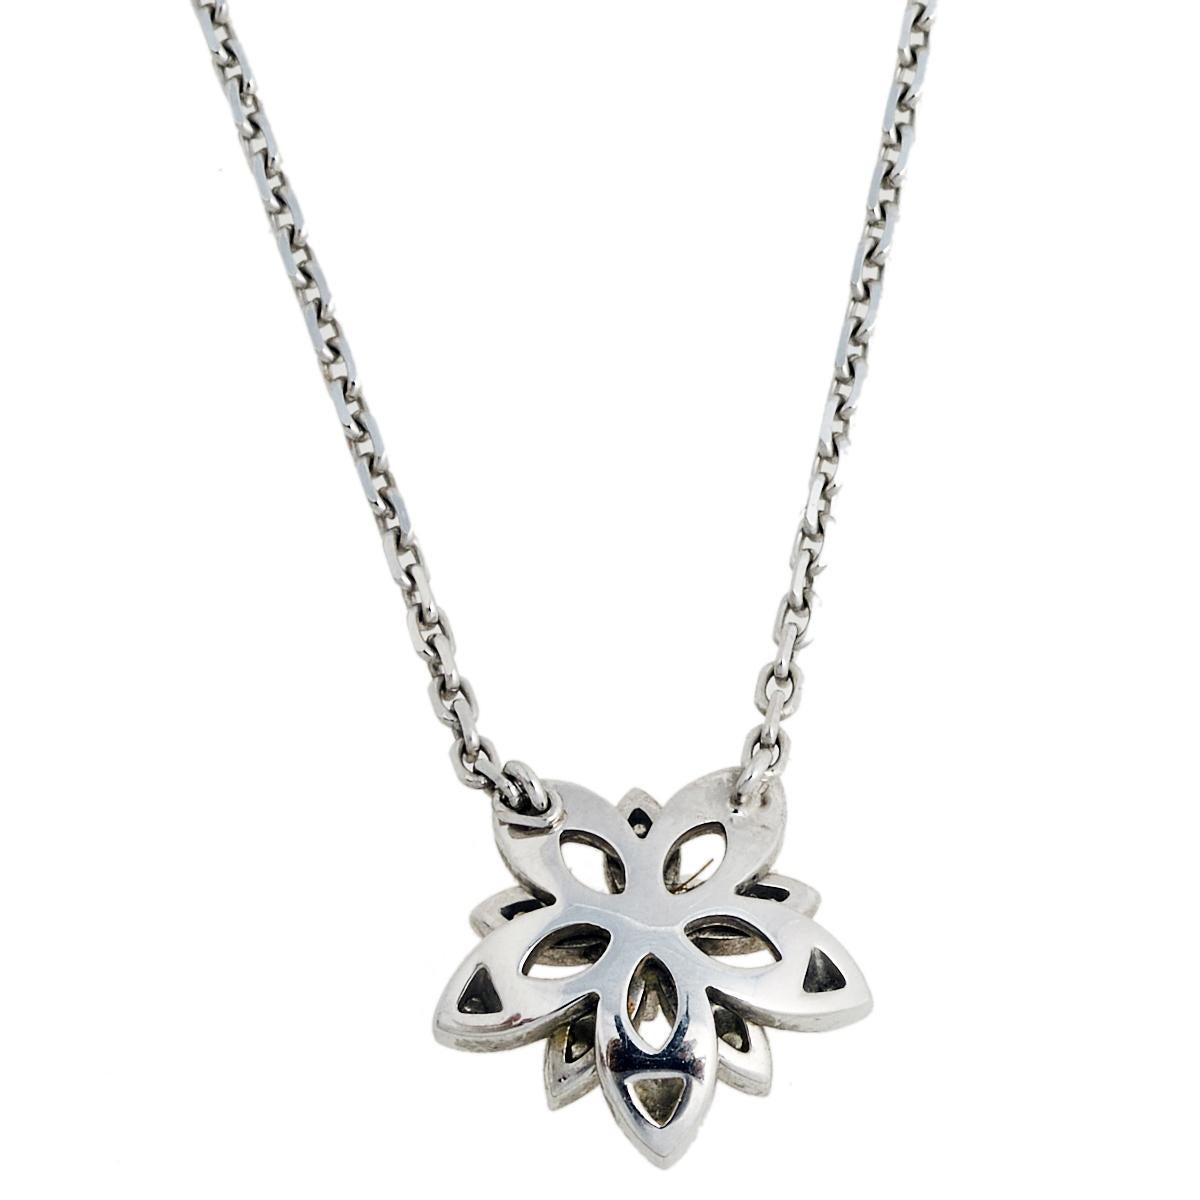 Contemporary Van Cleef & Arpels Lotus Diamond 18k White Gold Openwork Pendant Necklace